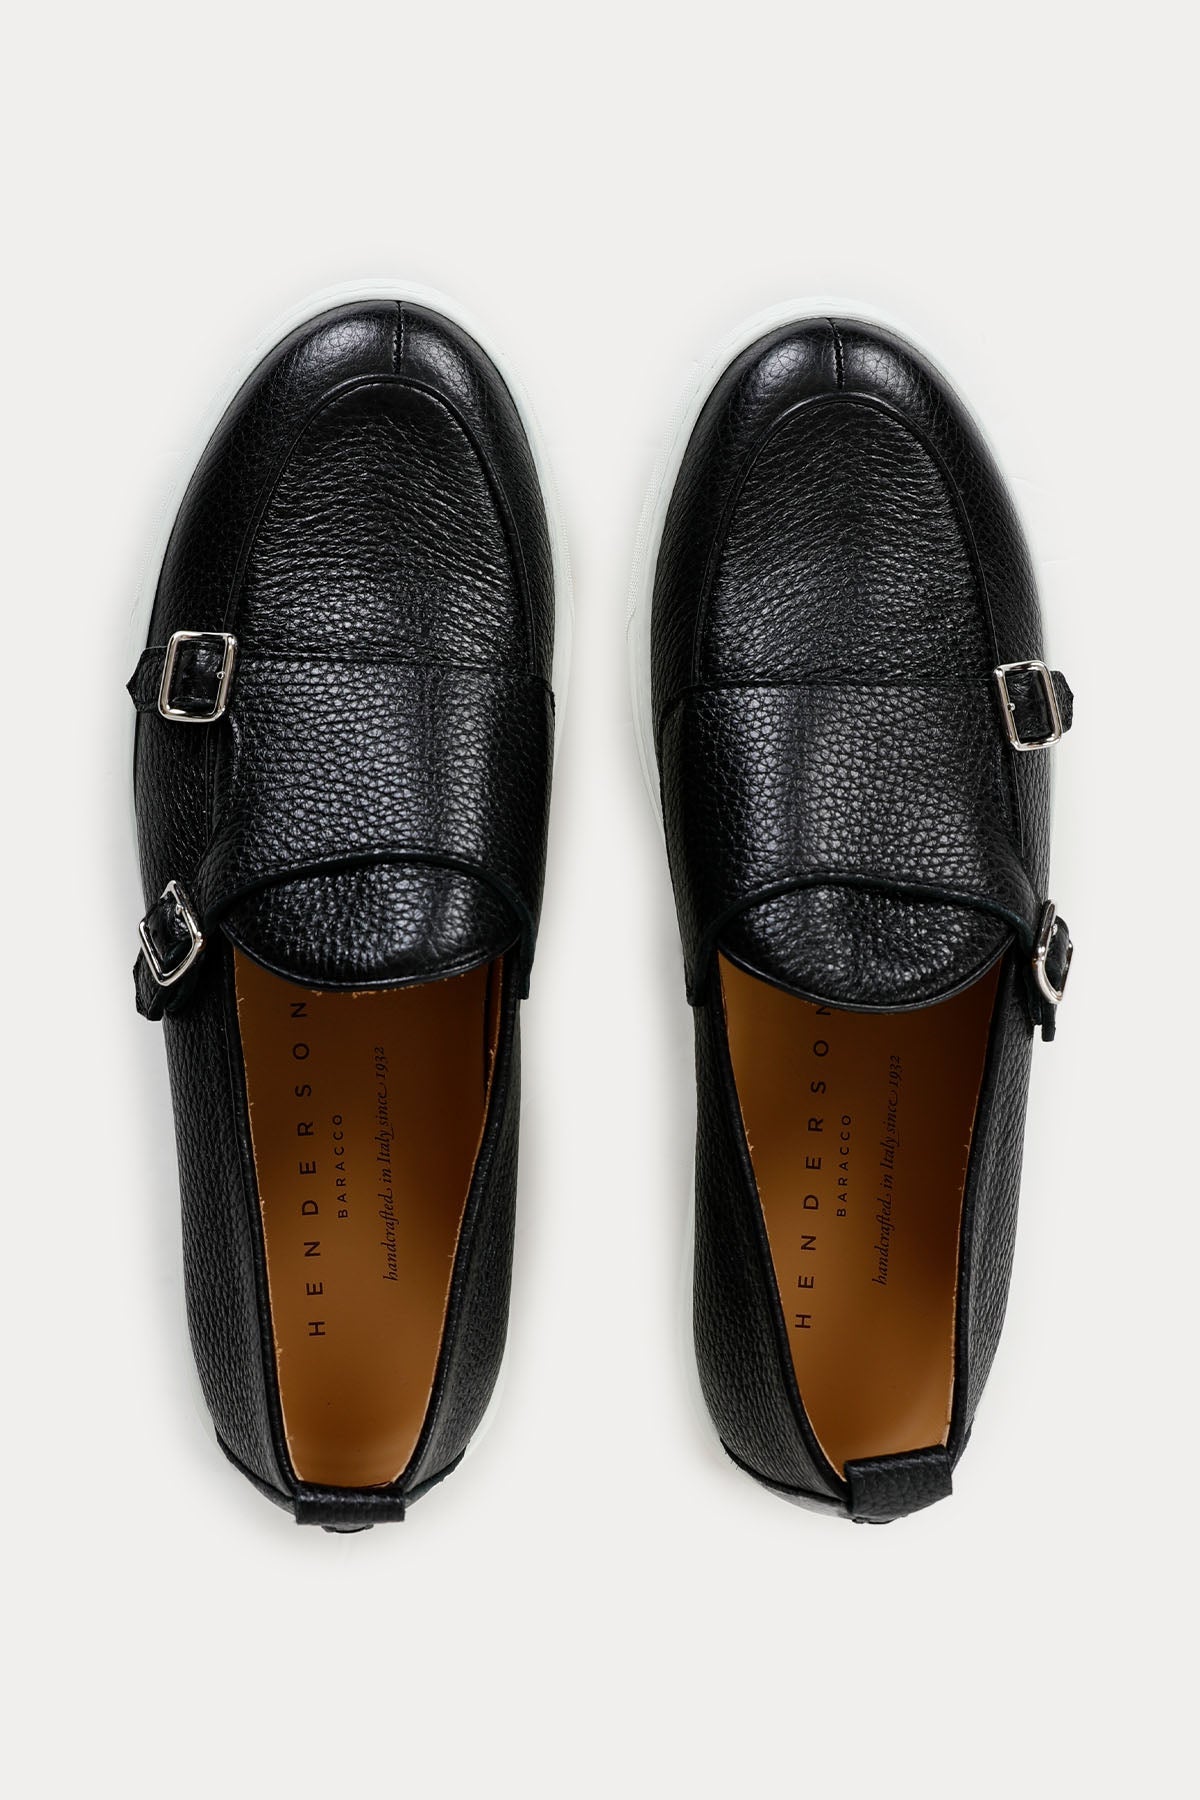 Henderson Theo Çift Tokalı Deri Monk Loafer Ayakkabı